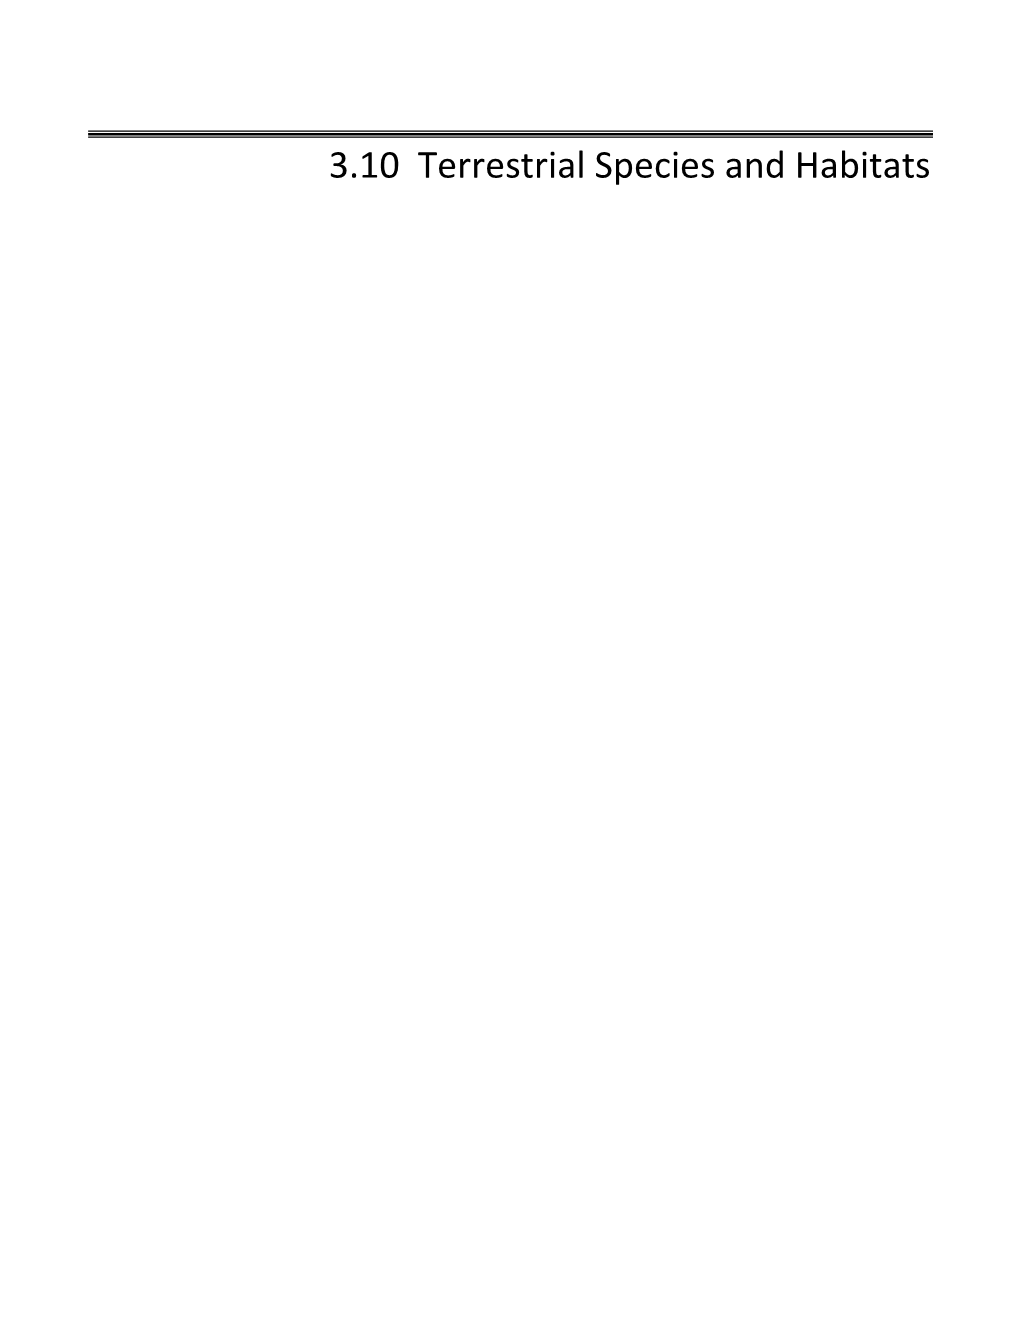 Section 3.10 Terrestrial Species and Habitats